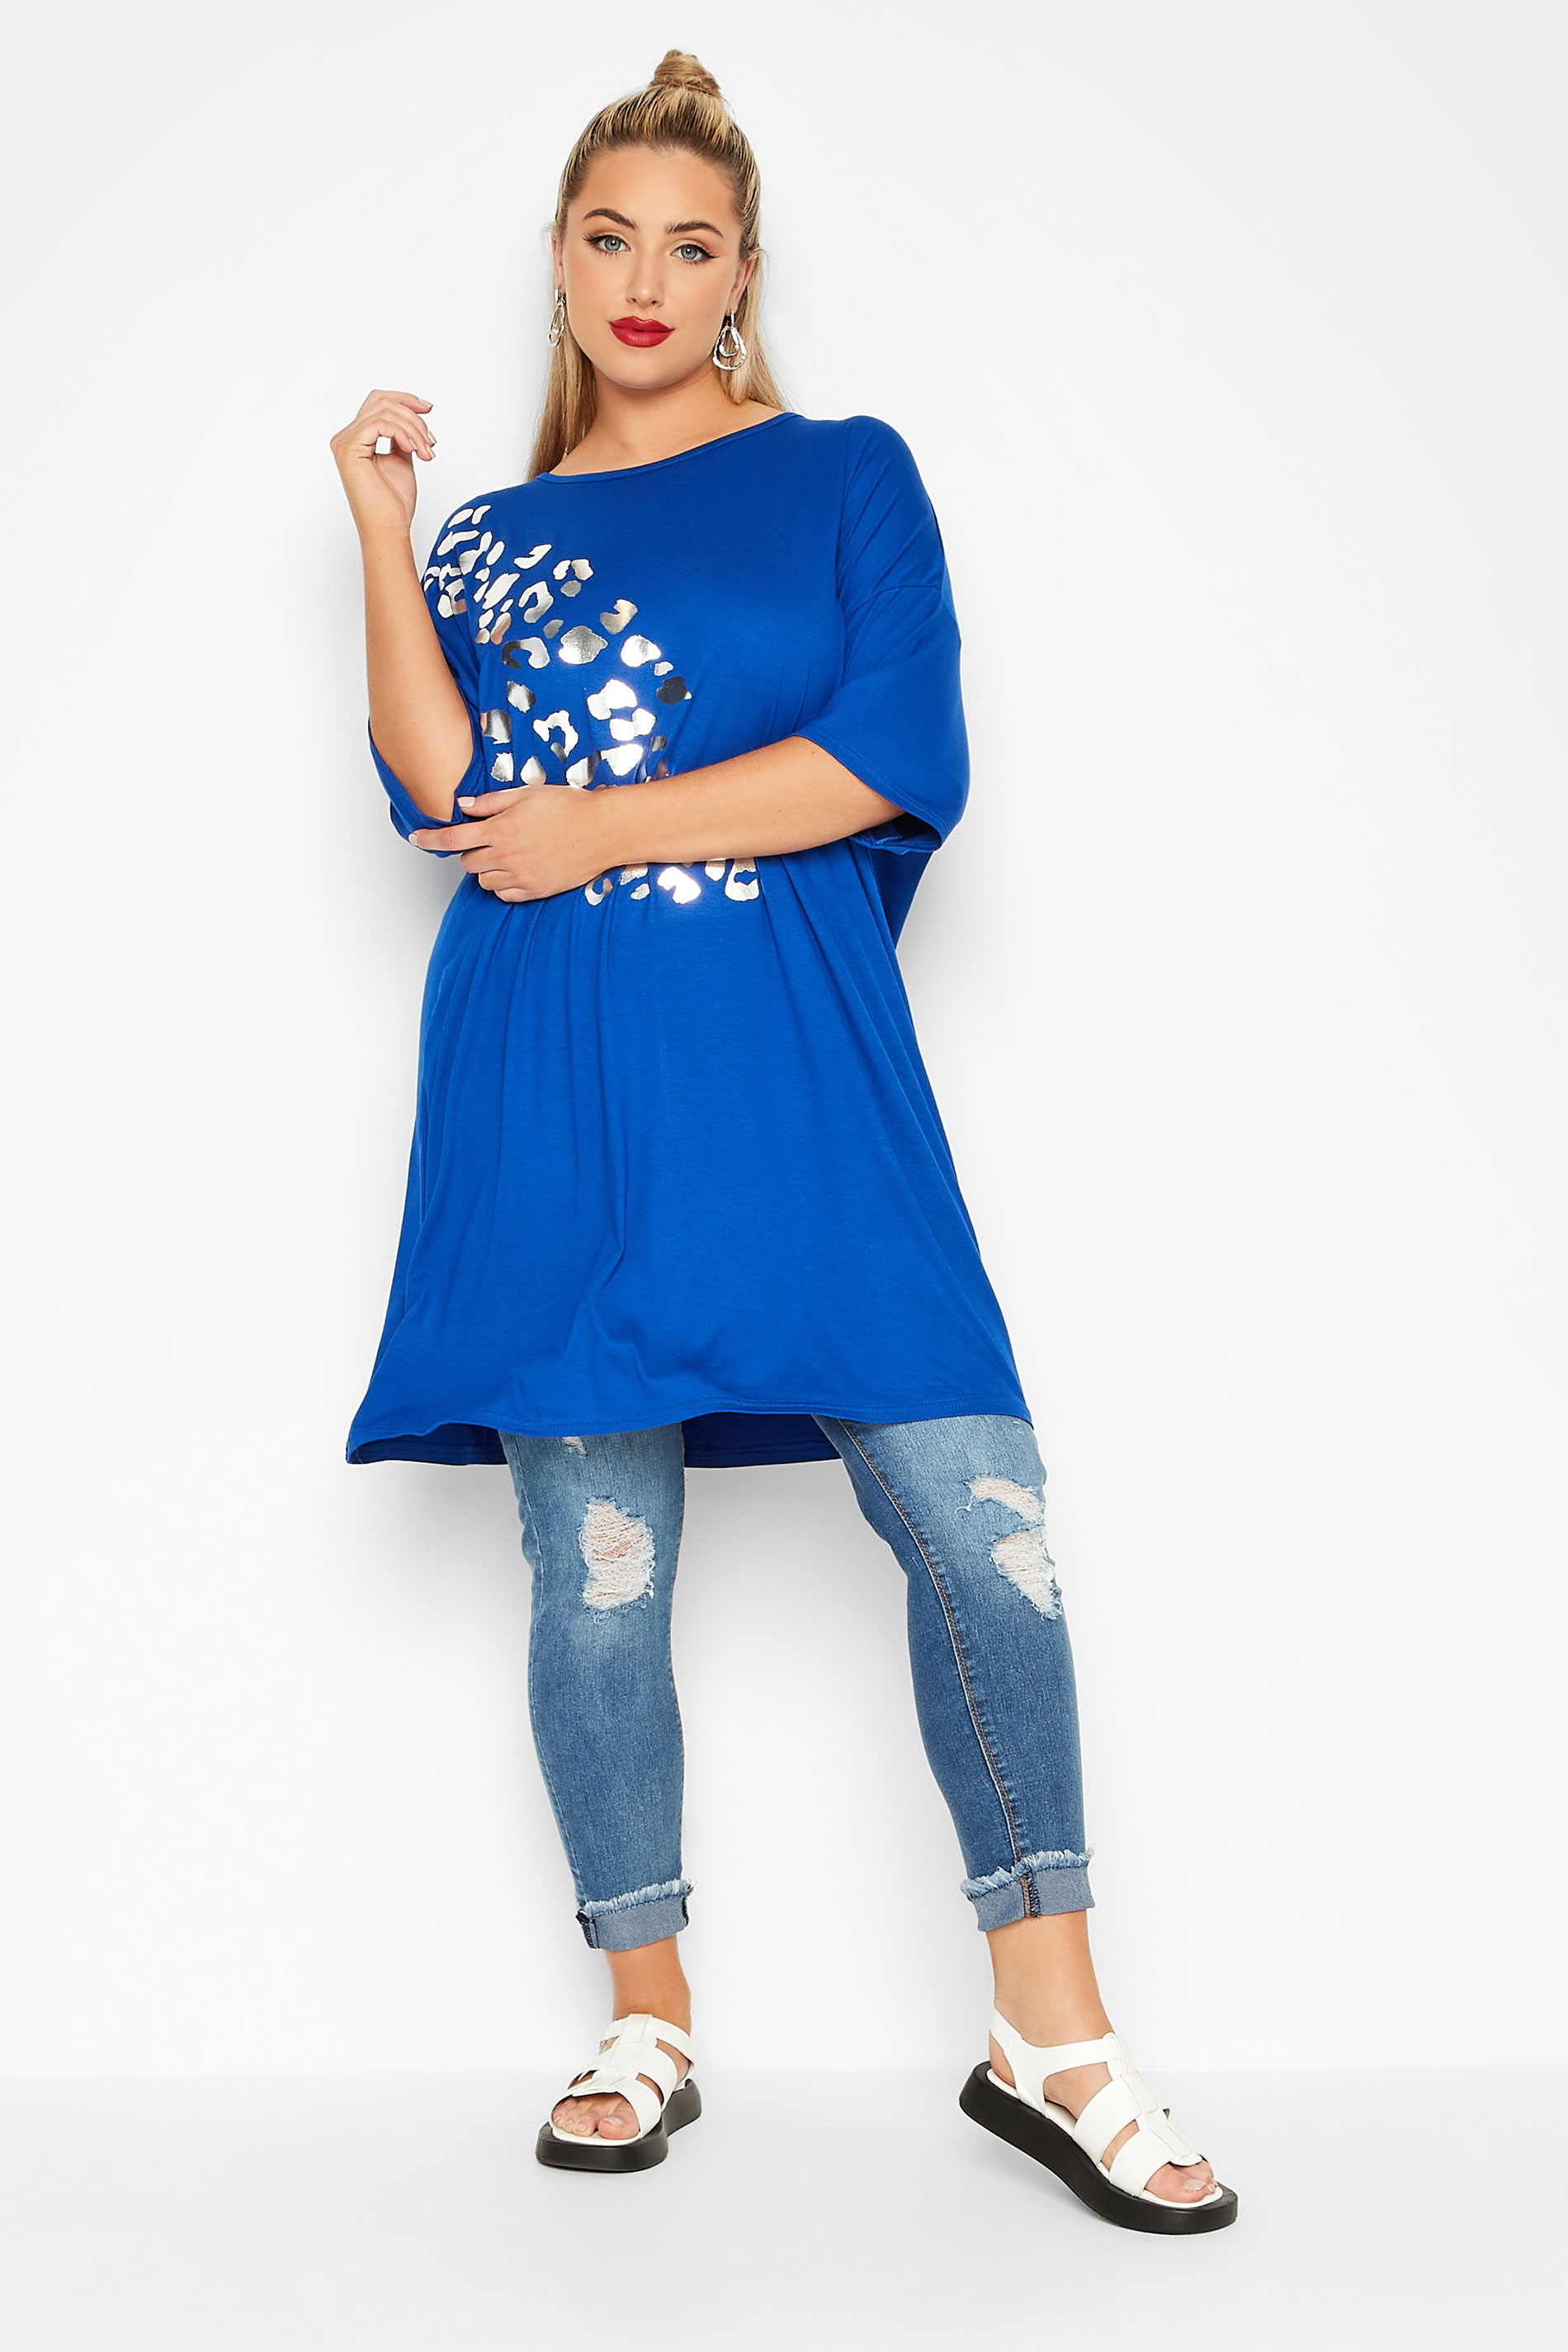 Grande taille  Tops Grande taille  T-Shirts | LIMITED COLLECTION - T-Shirt Bleu Roi Léopard Argenté - WI64417